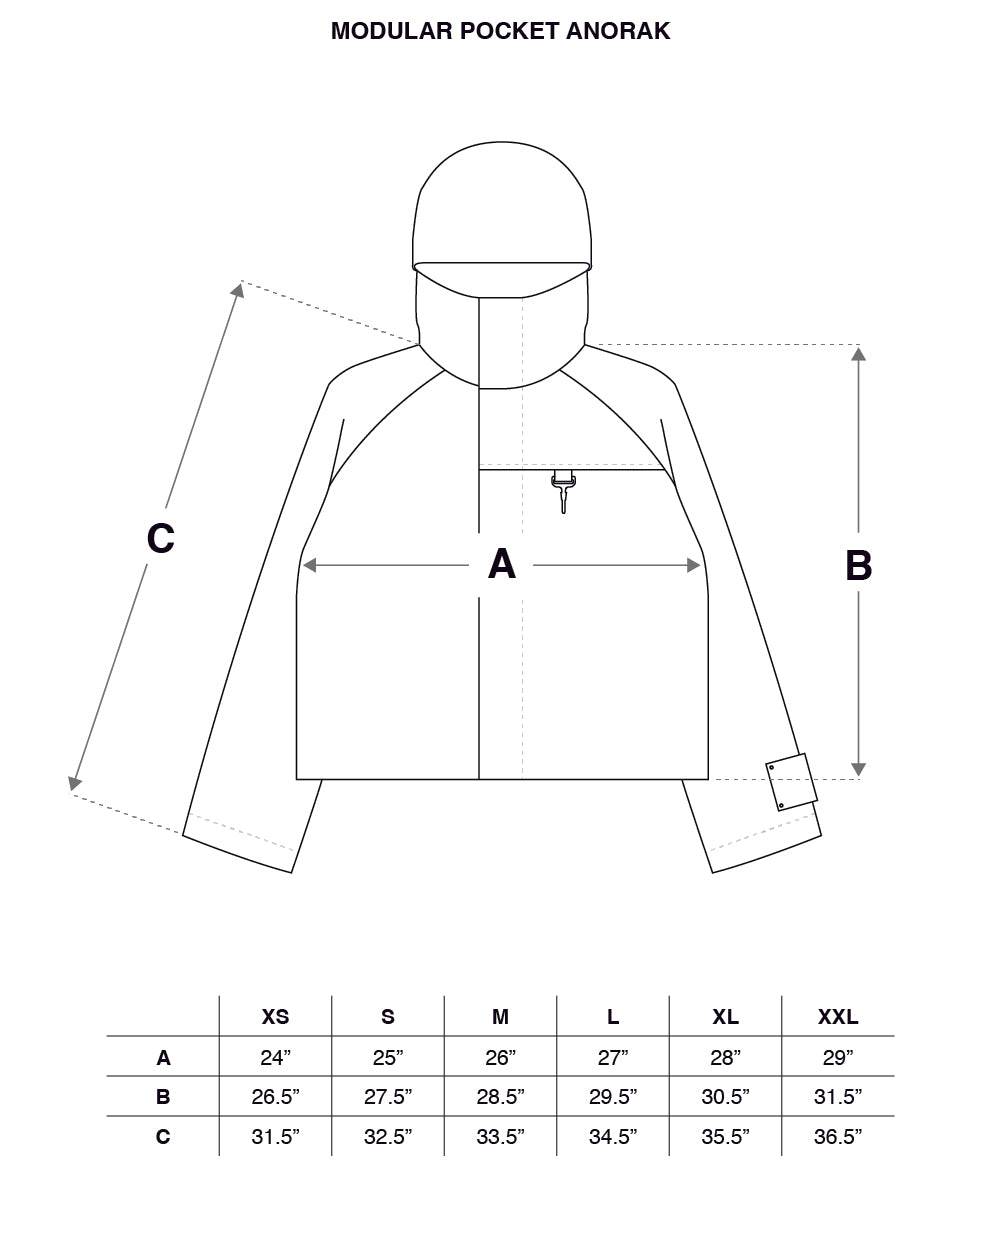 Modular Pocket Cotton Ripstop Anorak in Black Size Guide